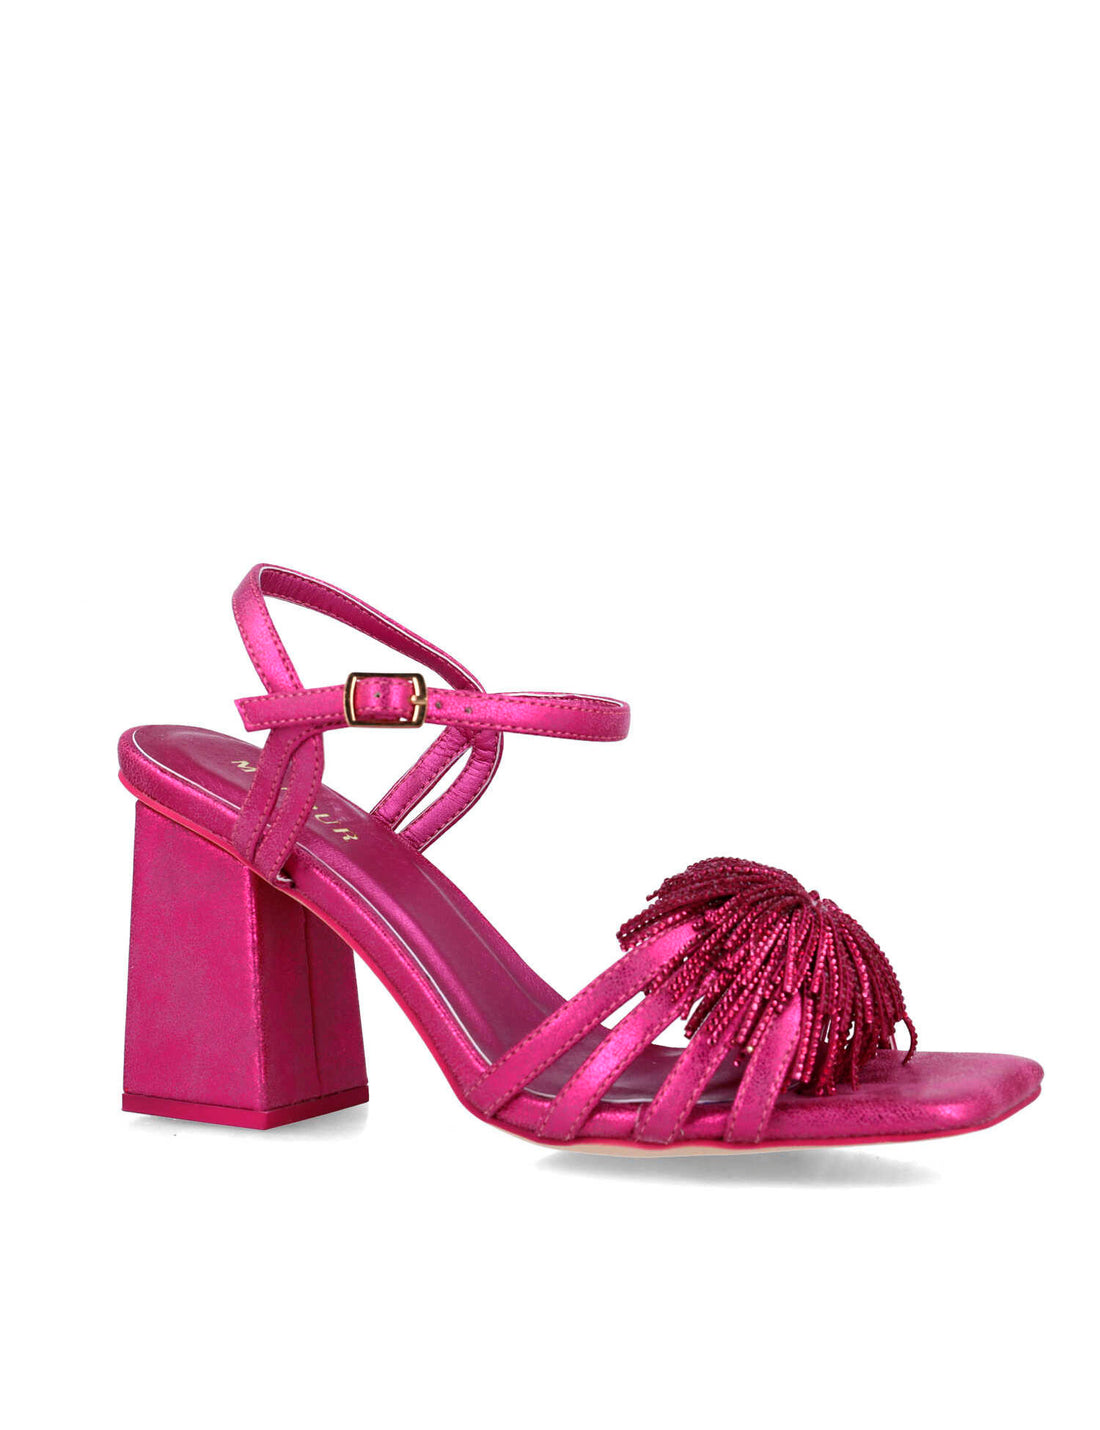 Pink High-Heel Sandals With Fringe Piece_25412_33_02